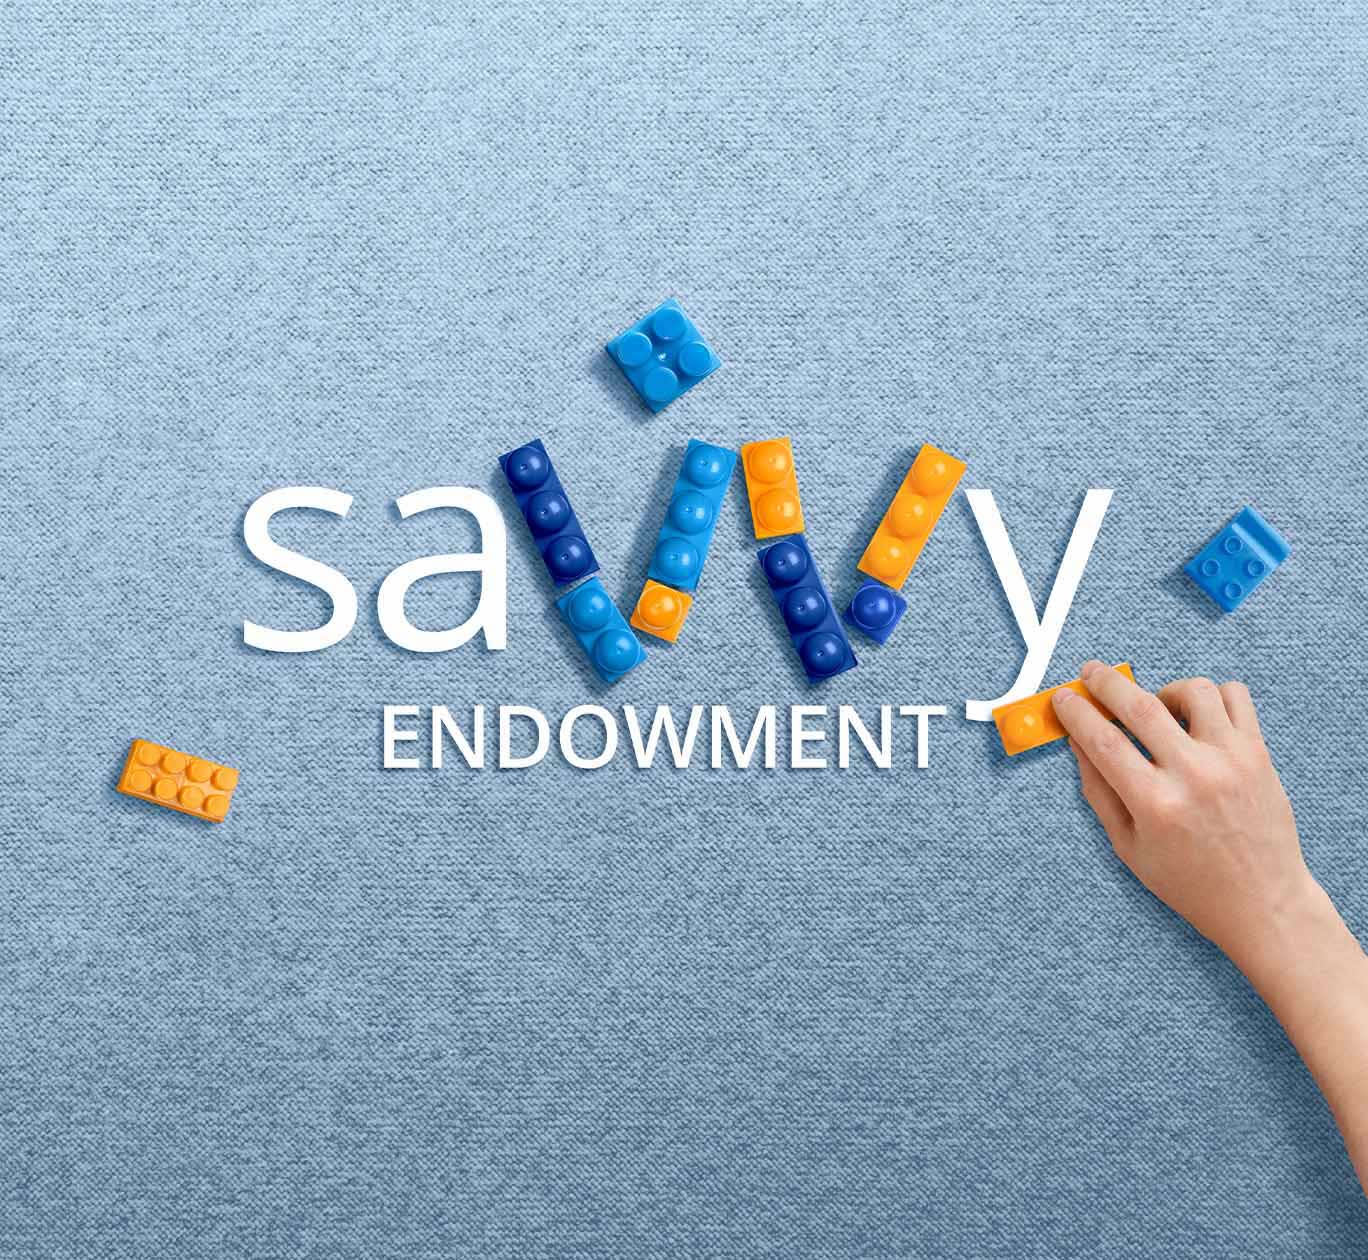 2-year endowment plan, SavvyEndowment 11